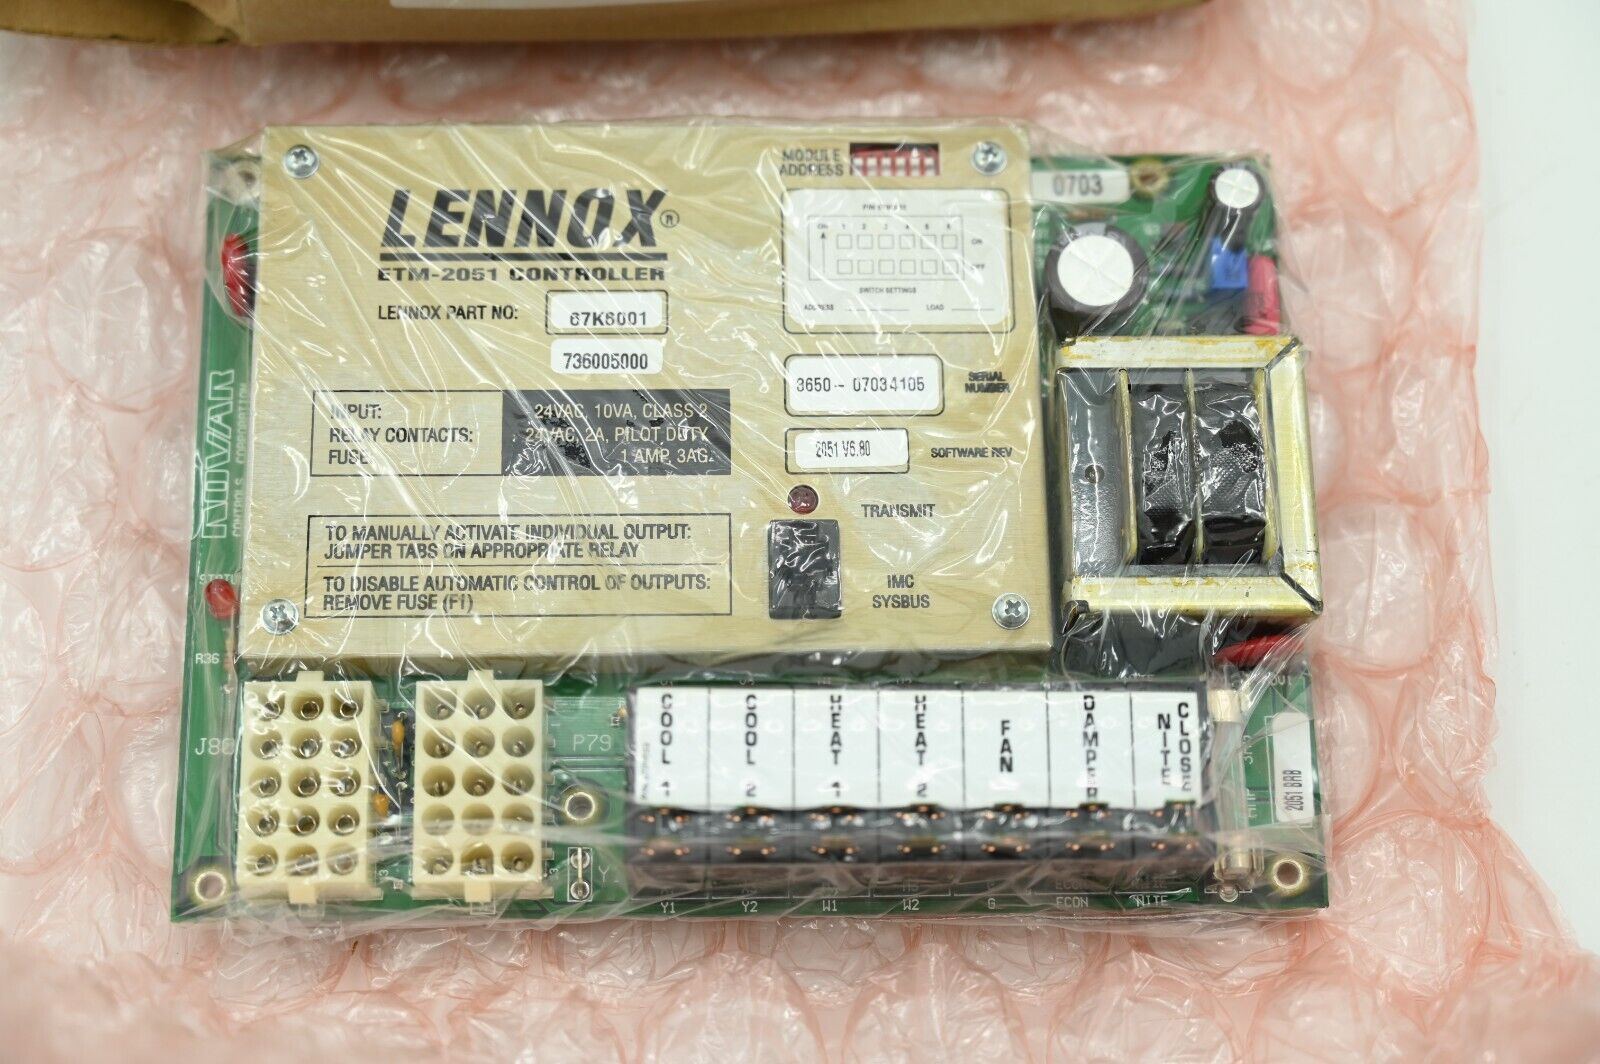 Lennox Controller ETM-2051 Controller Part Number 67K6001 736005000